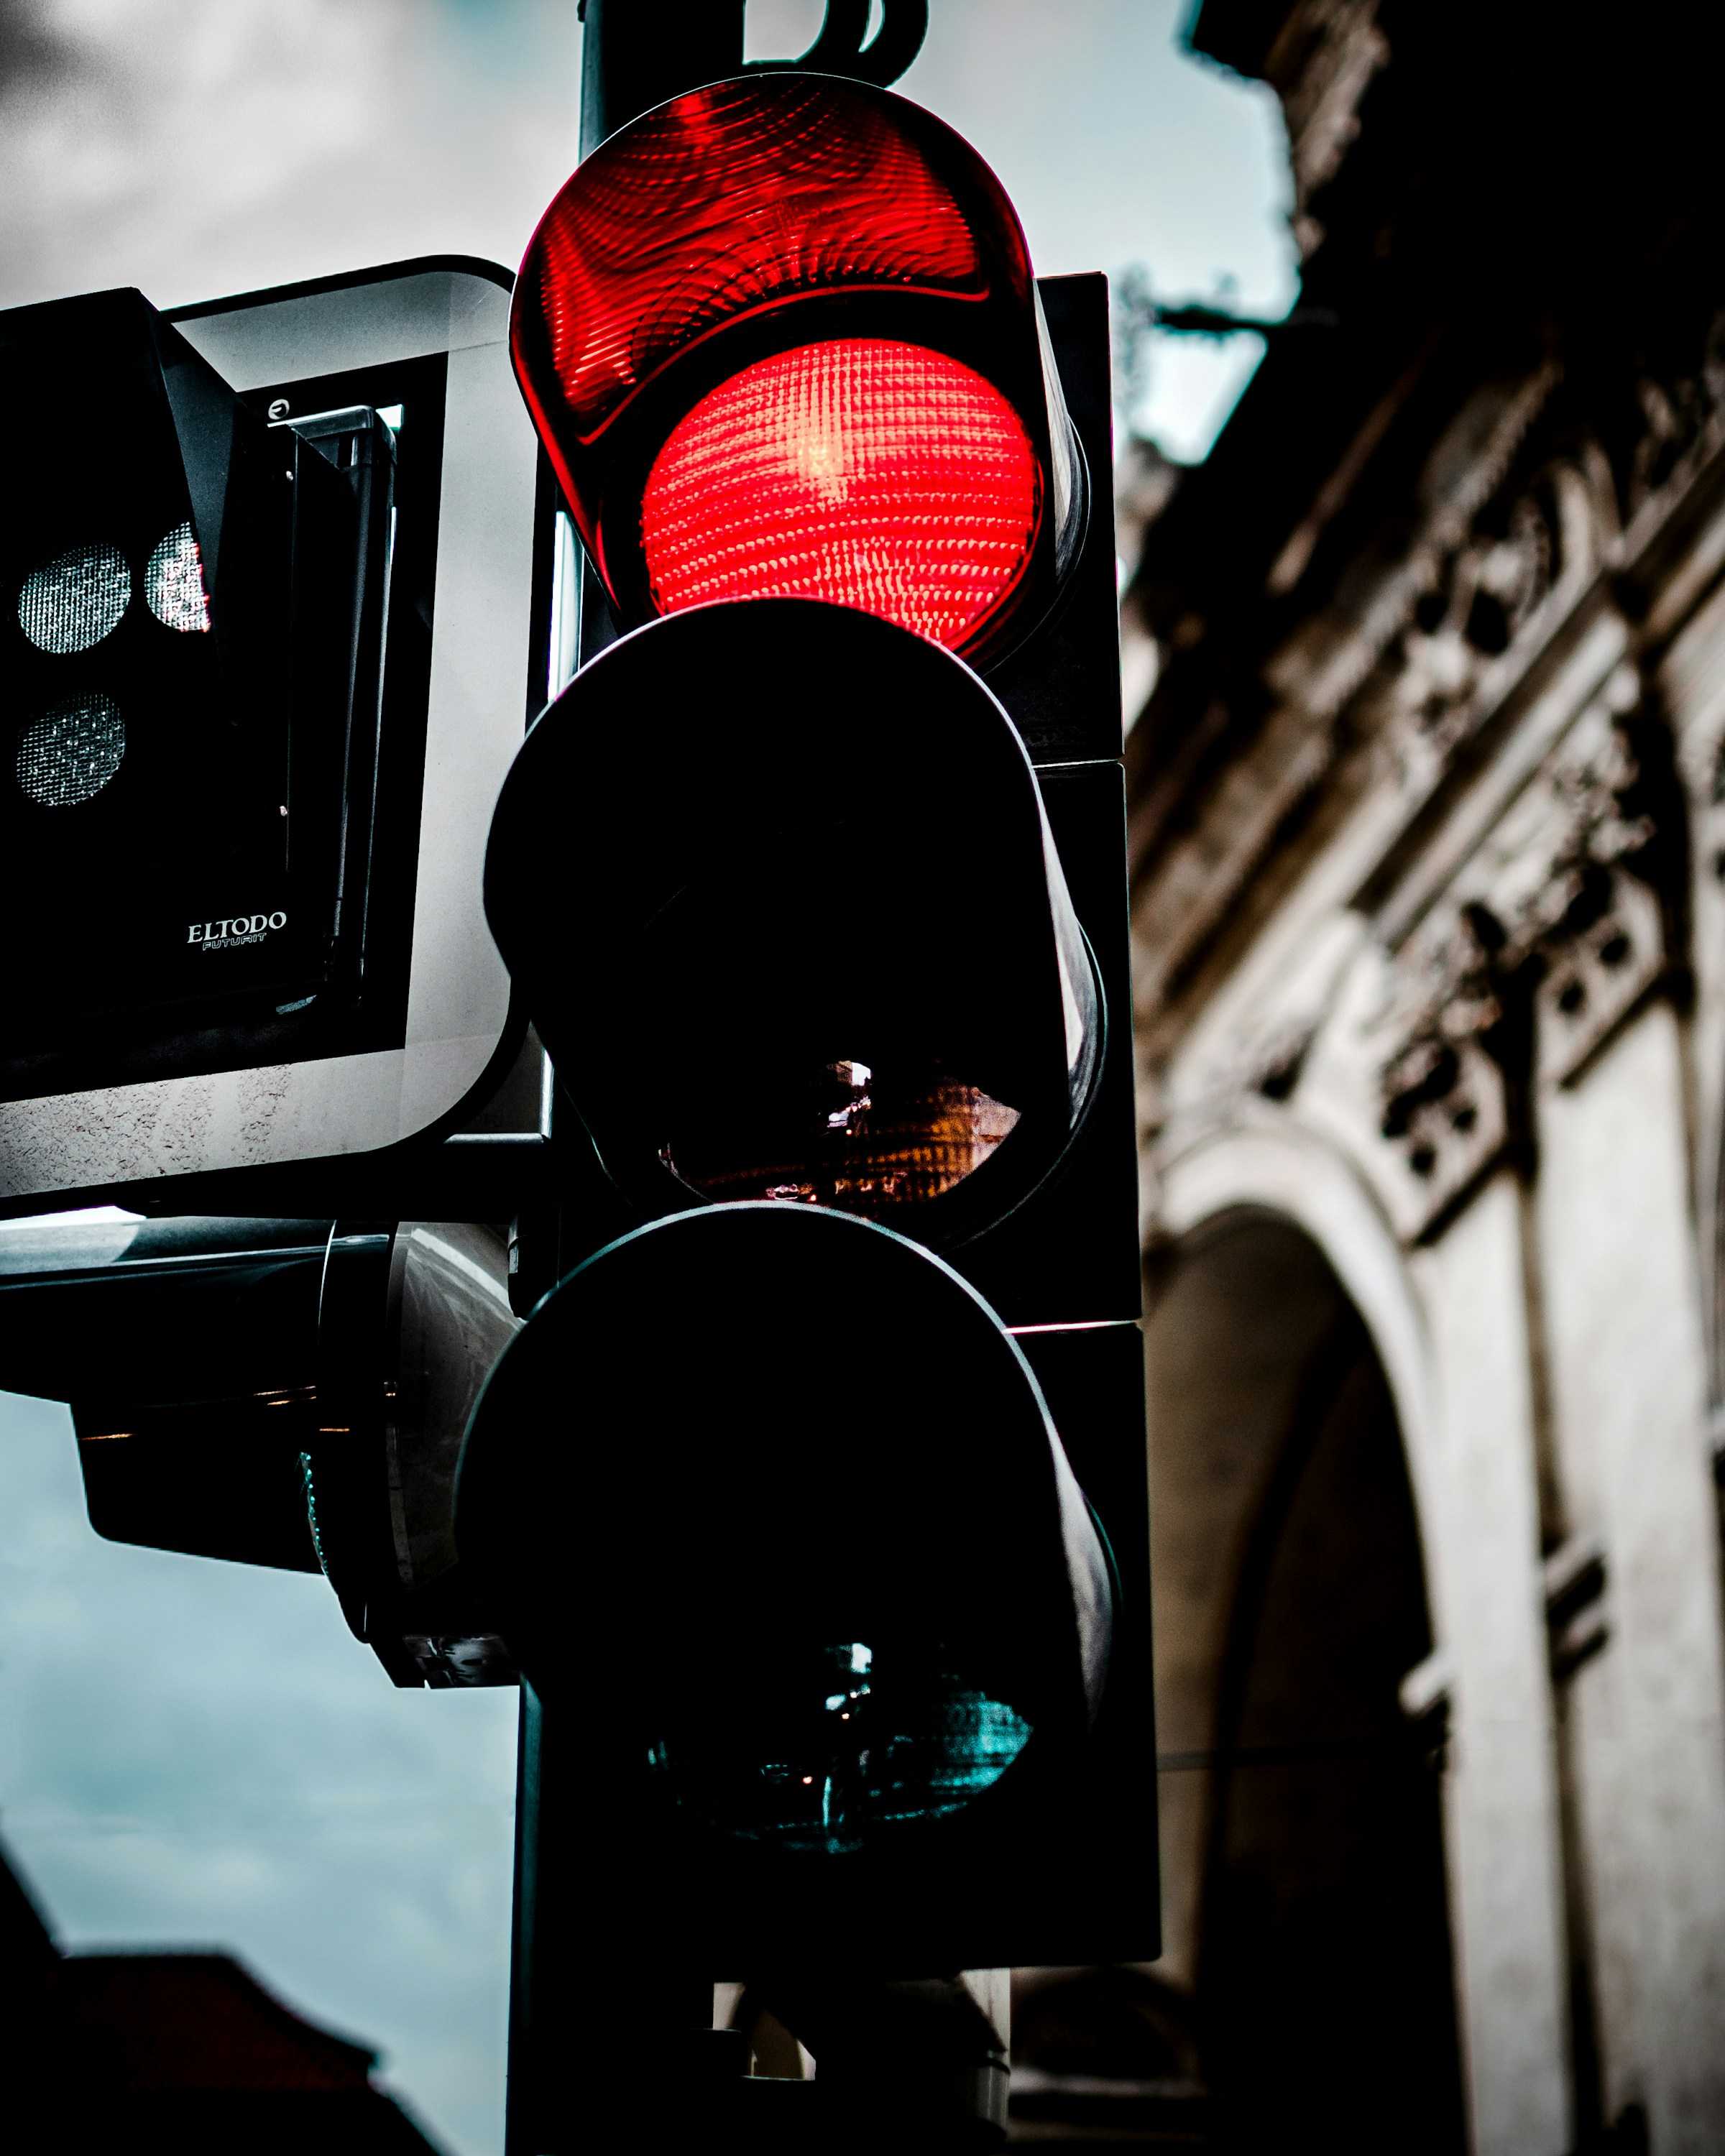 A red traffic light | Source: Unsplash